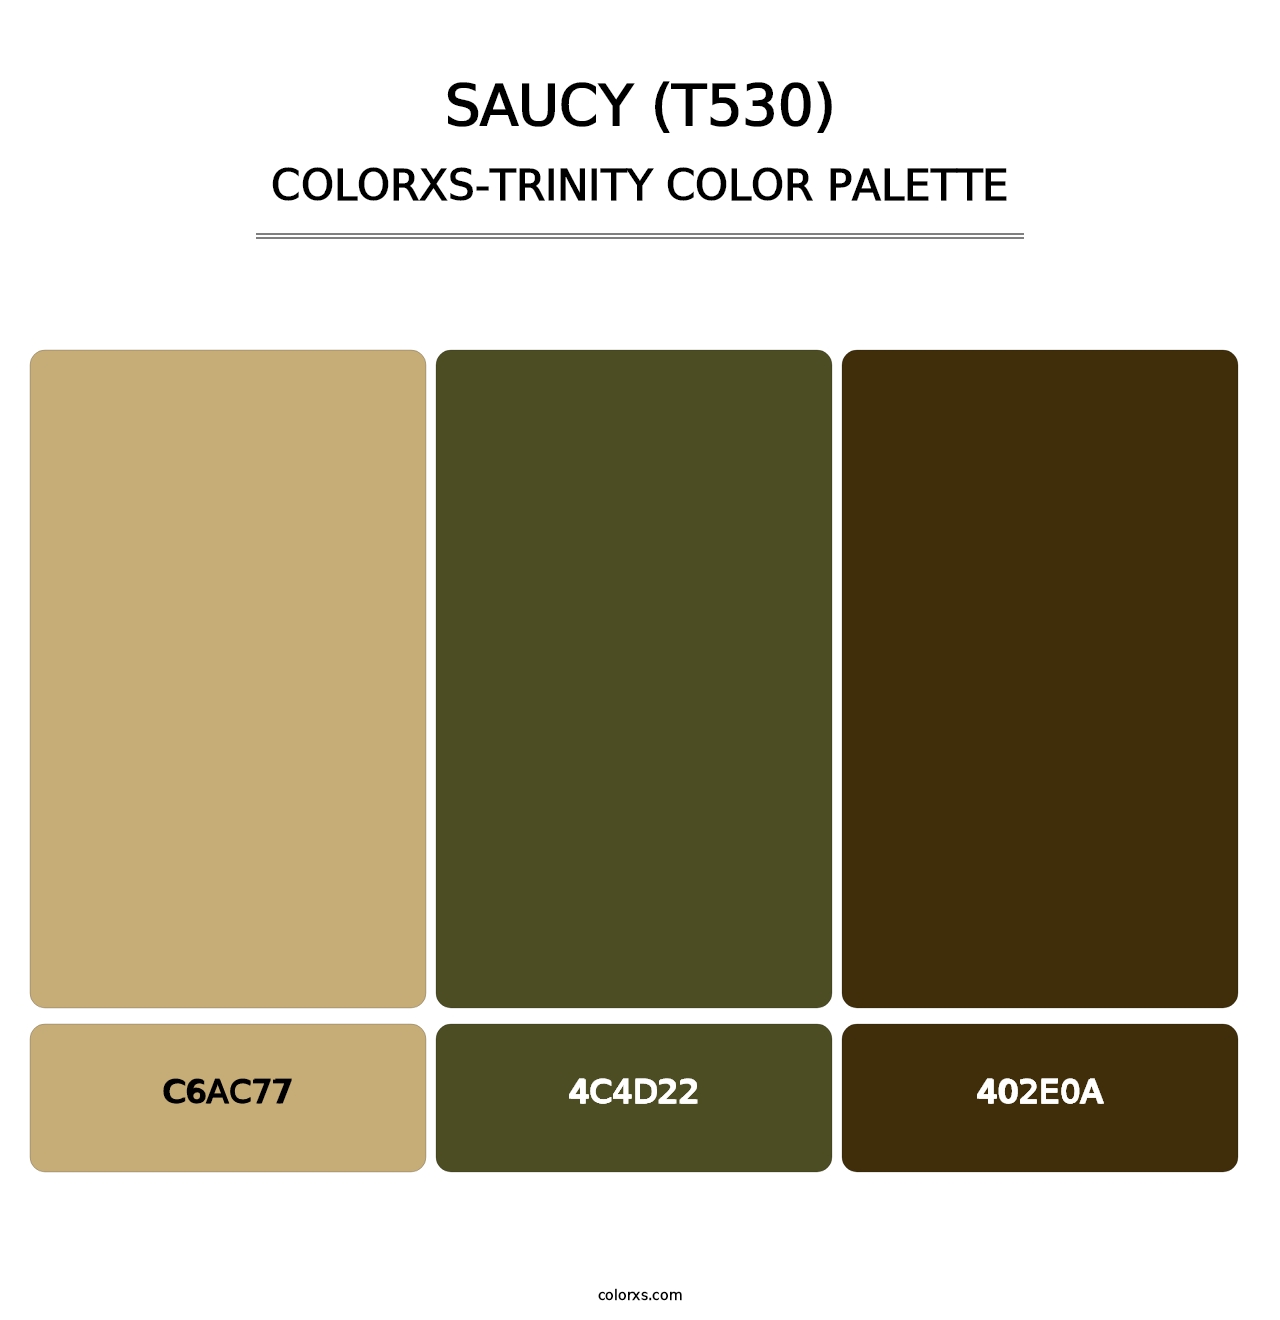 Saucy (T530) - Colorxs Trinity Palette